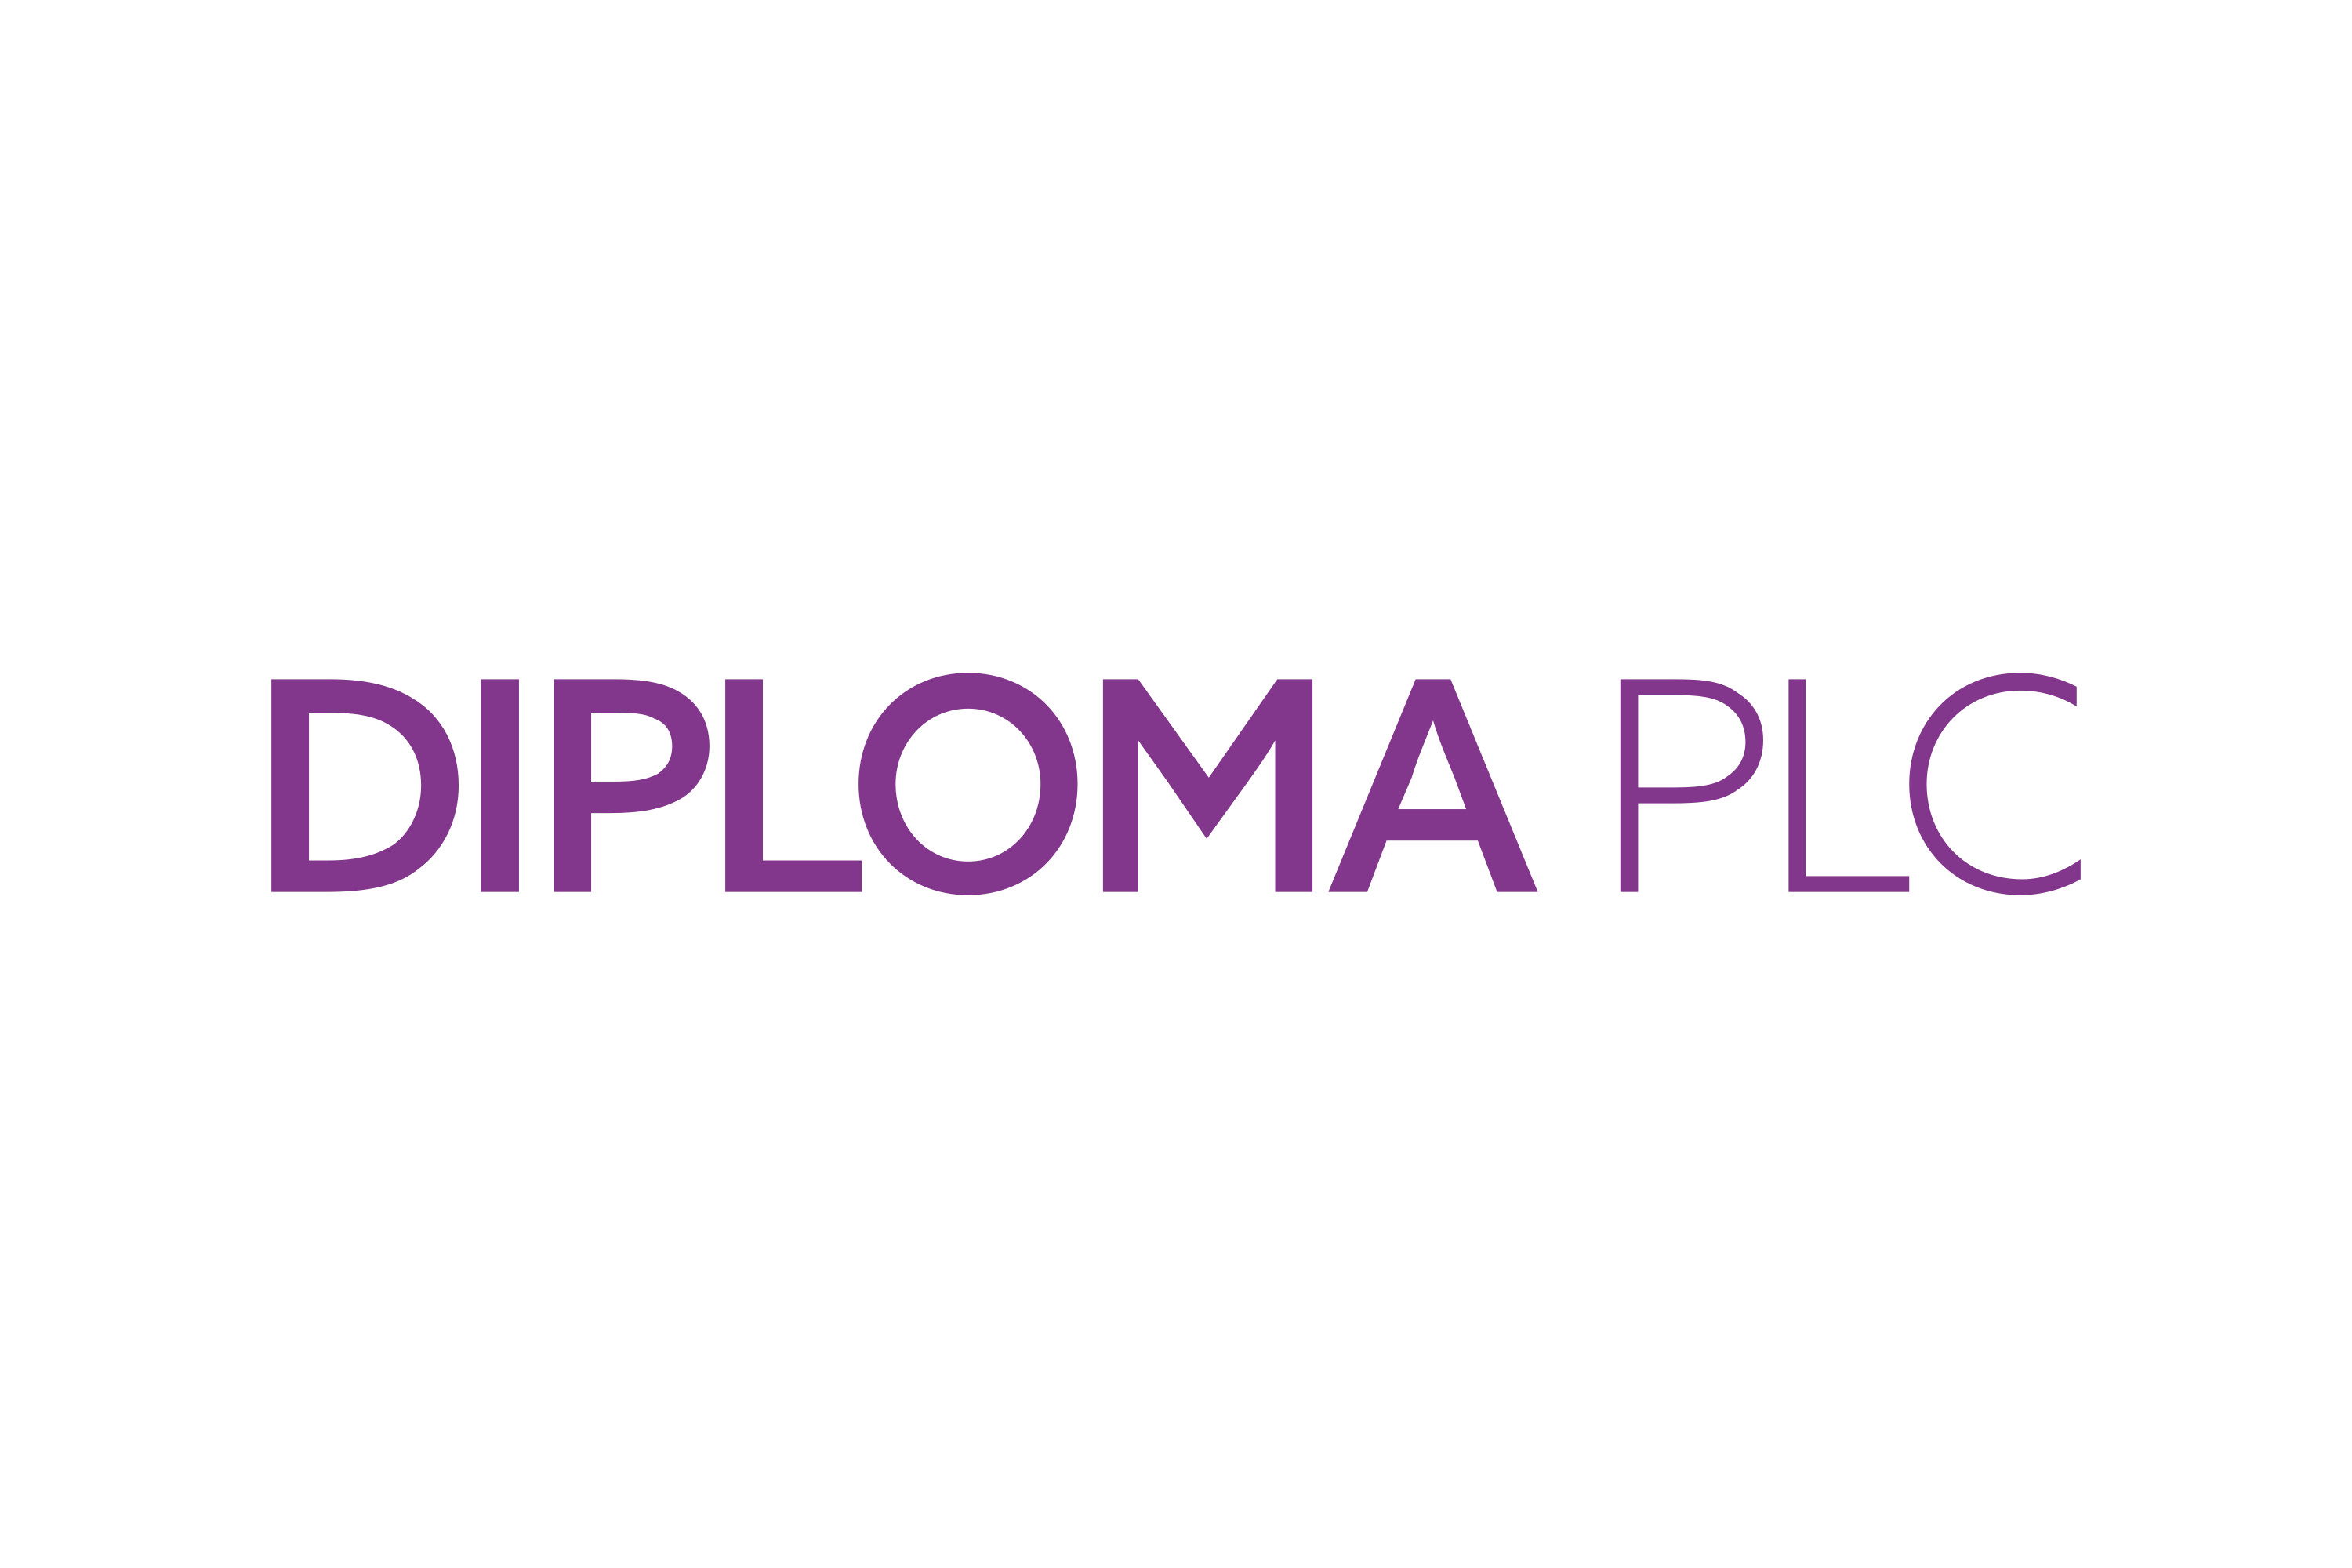 Download Diploma plc Logo in SVG Vector or PNG File Format - Logo.wine